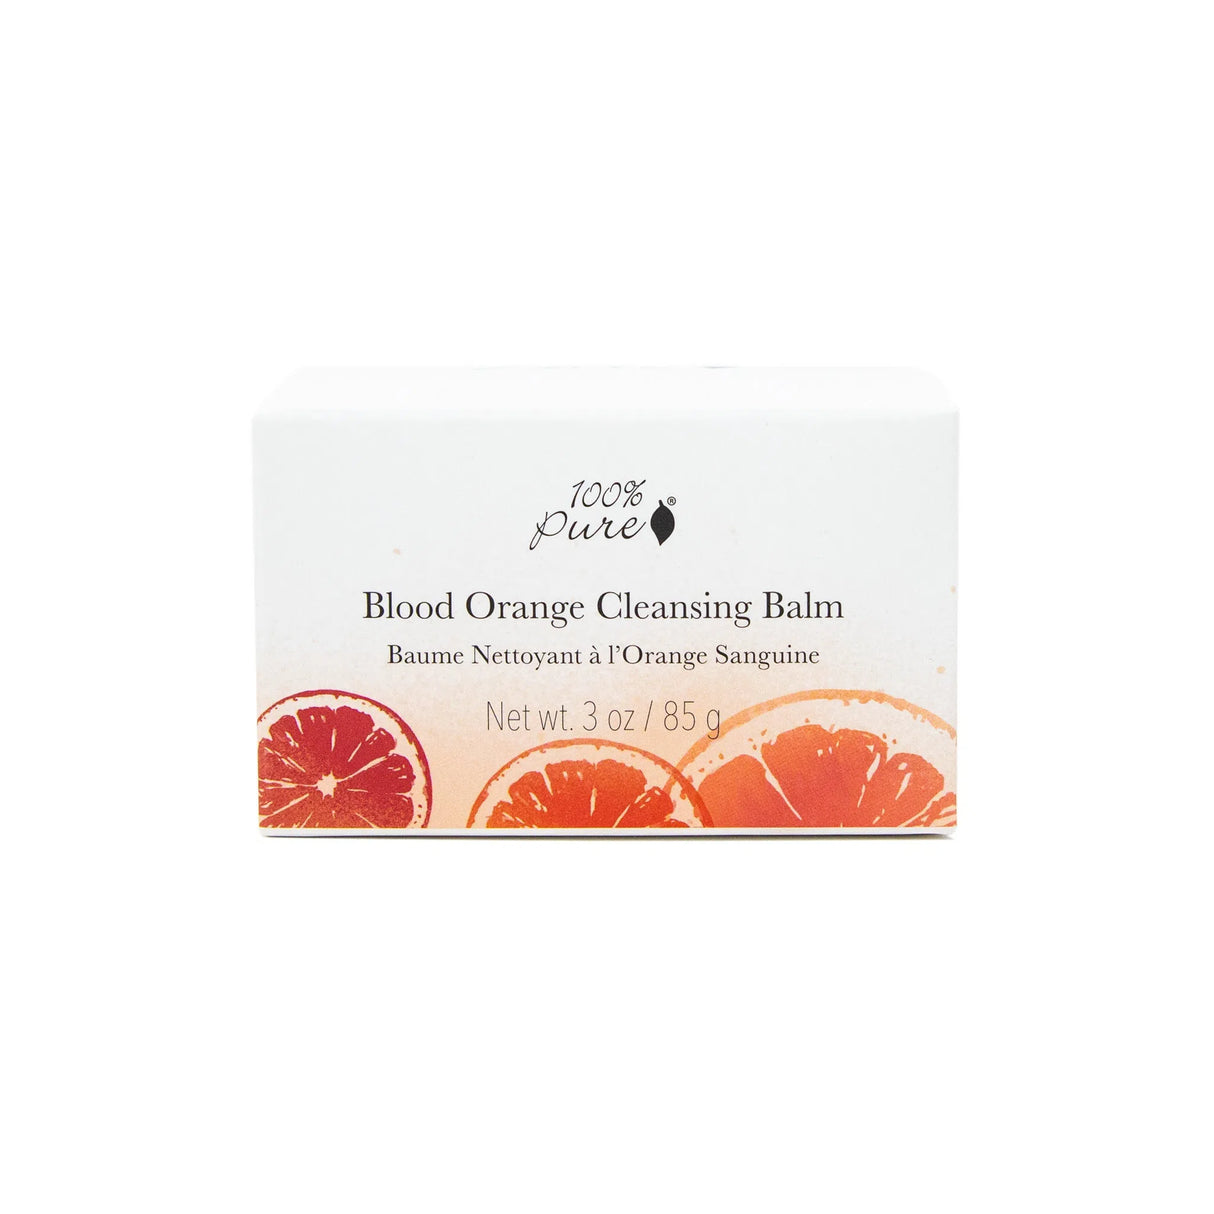 Blood Orange Cleansing Balm-100% Pure